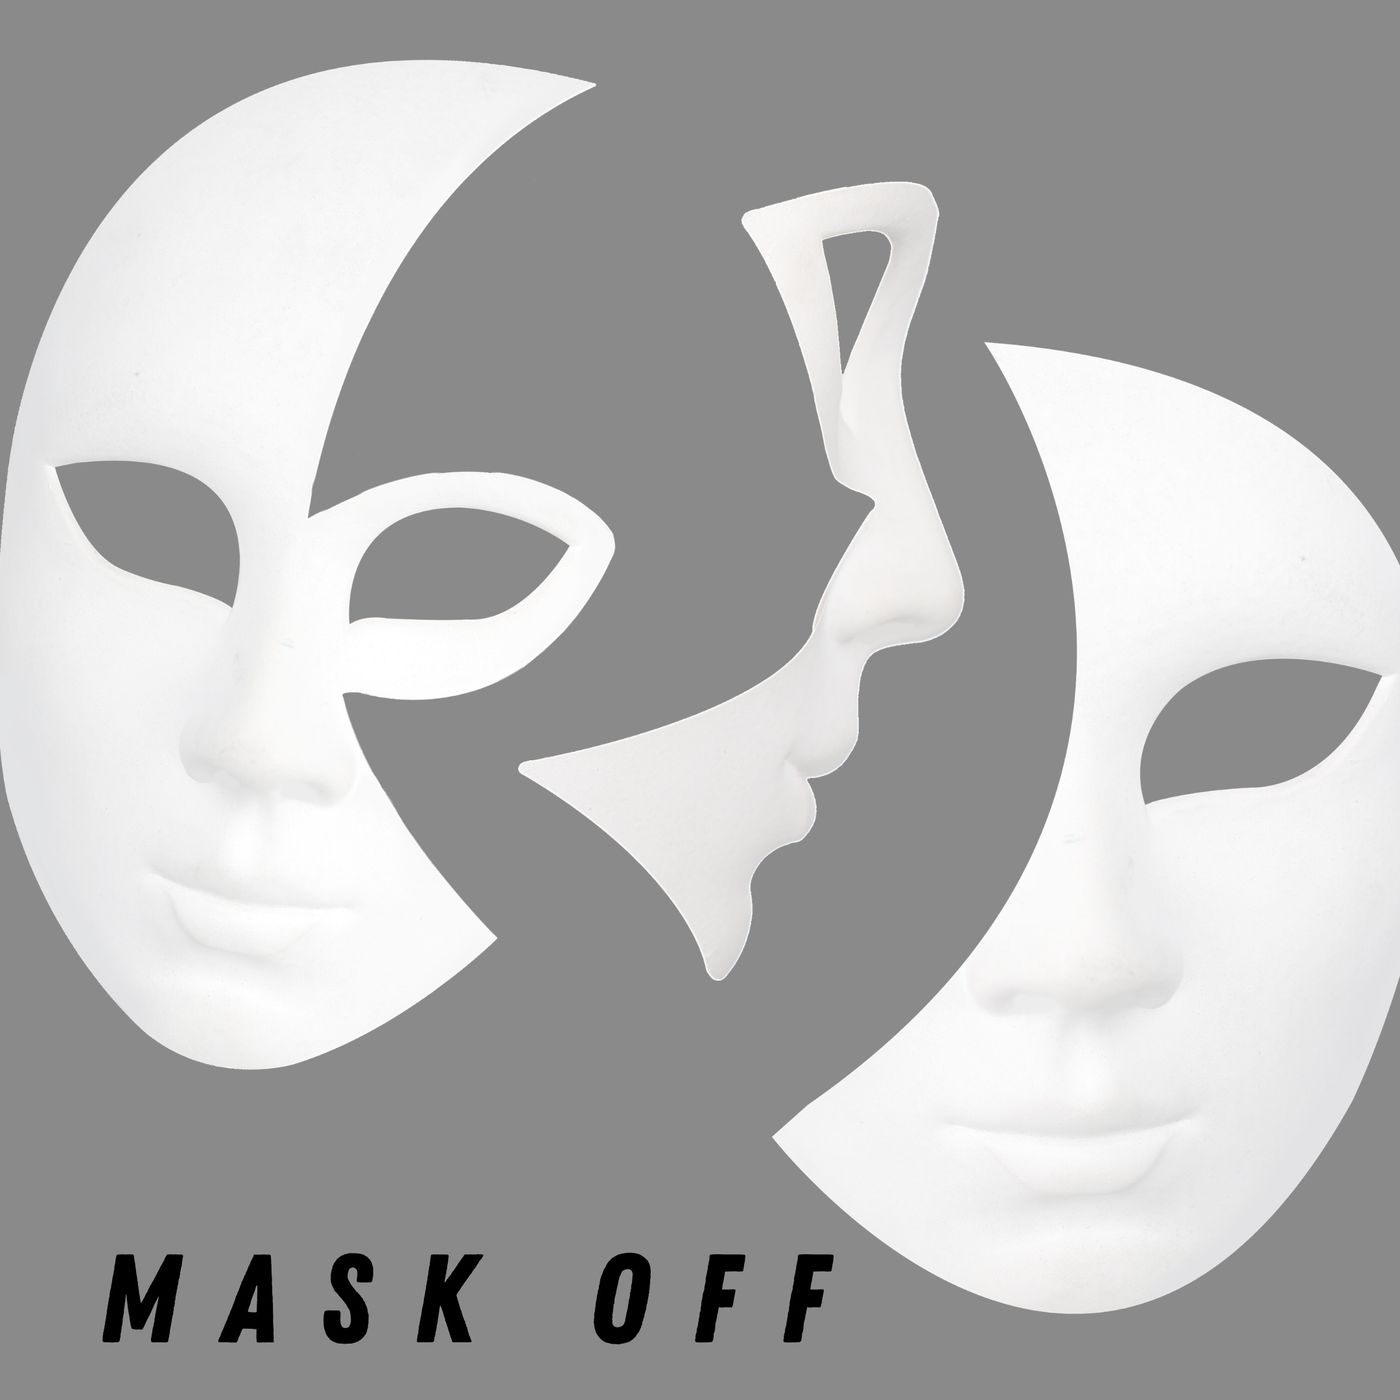 Mask OFF By Shana Turner